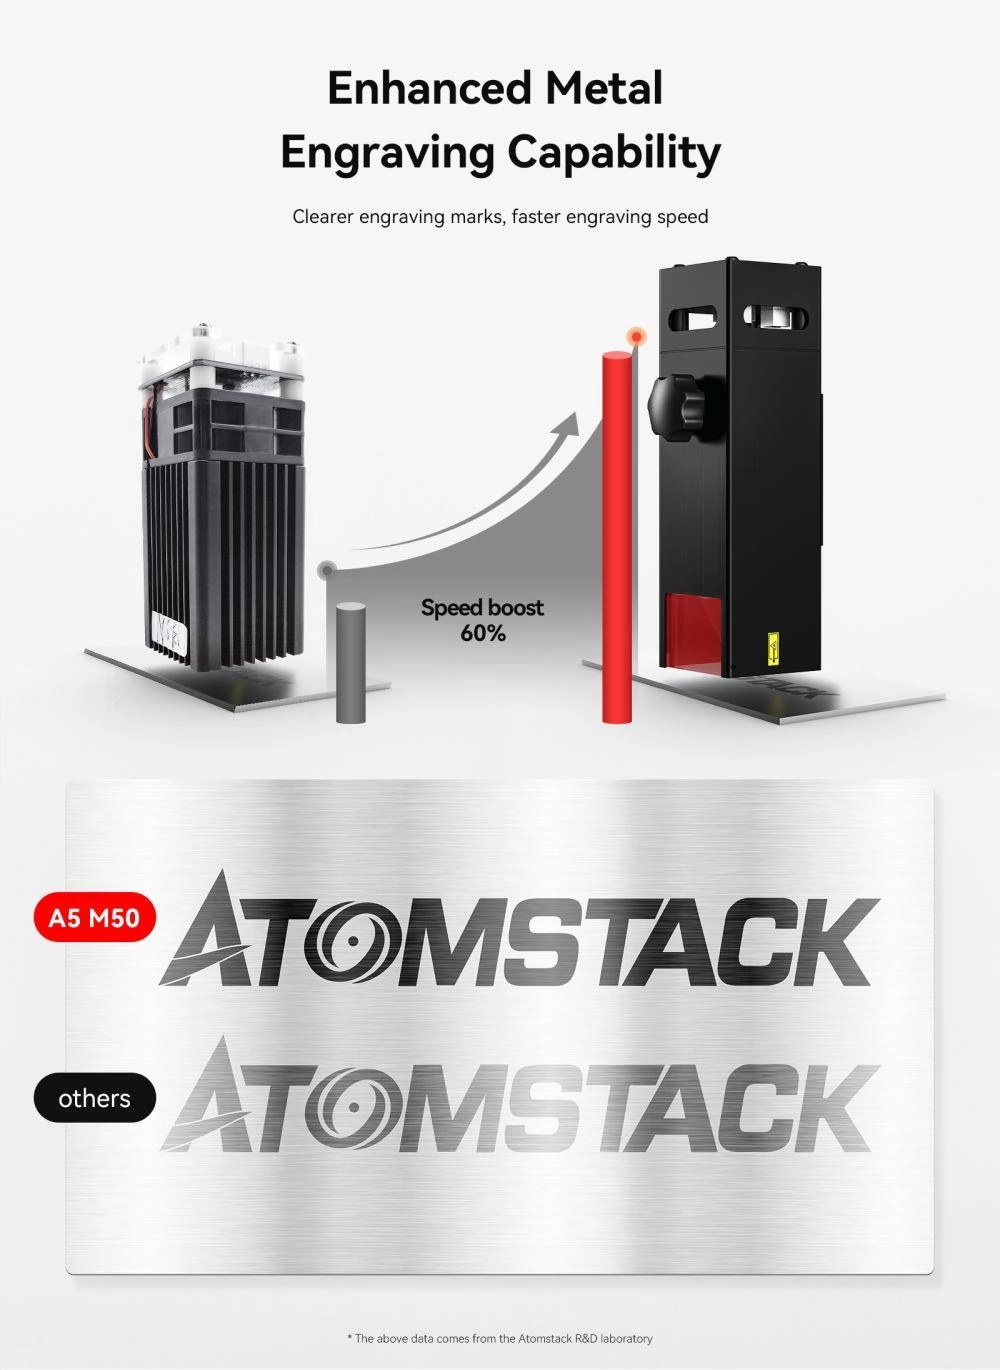 ATOMSTACK A5 M50 Pro lasersnijder en graveur, vaste focus, Viervoudige Lens Dubbele Compressie Spot, 410x400mm